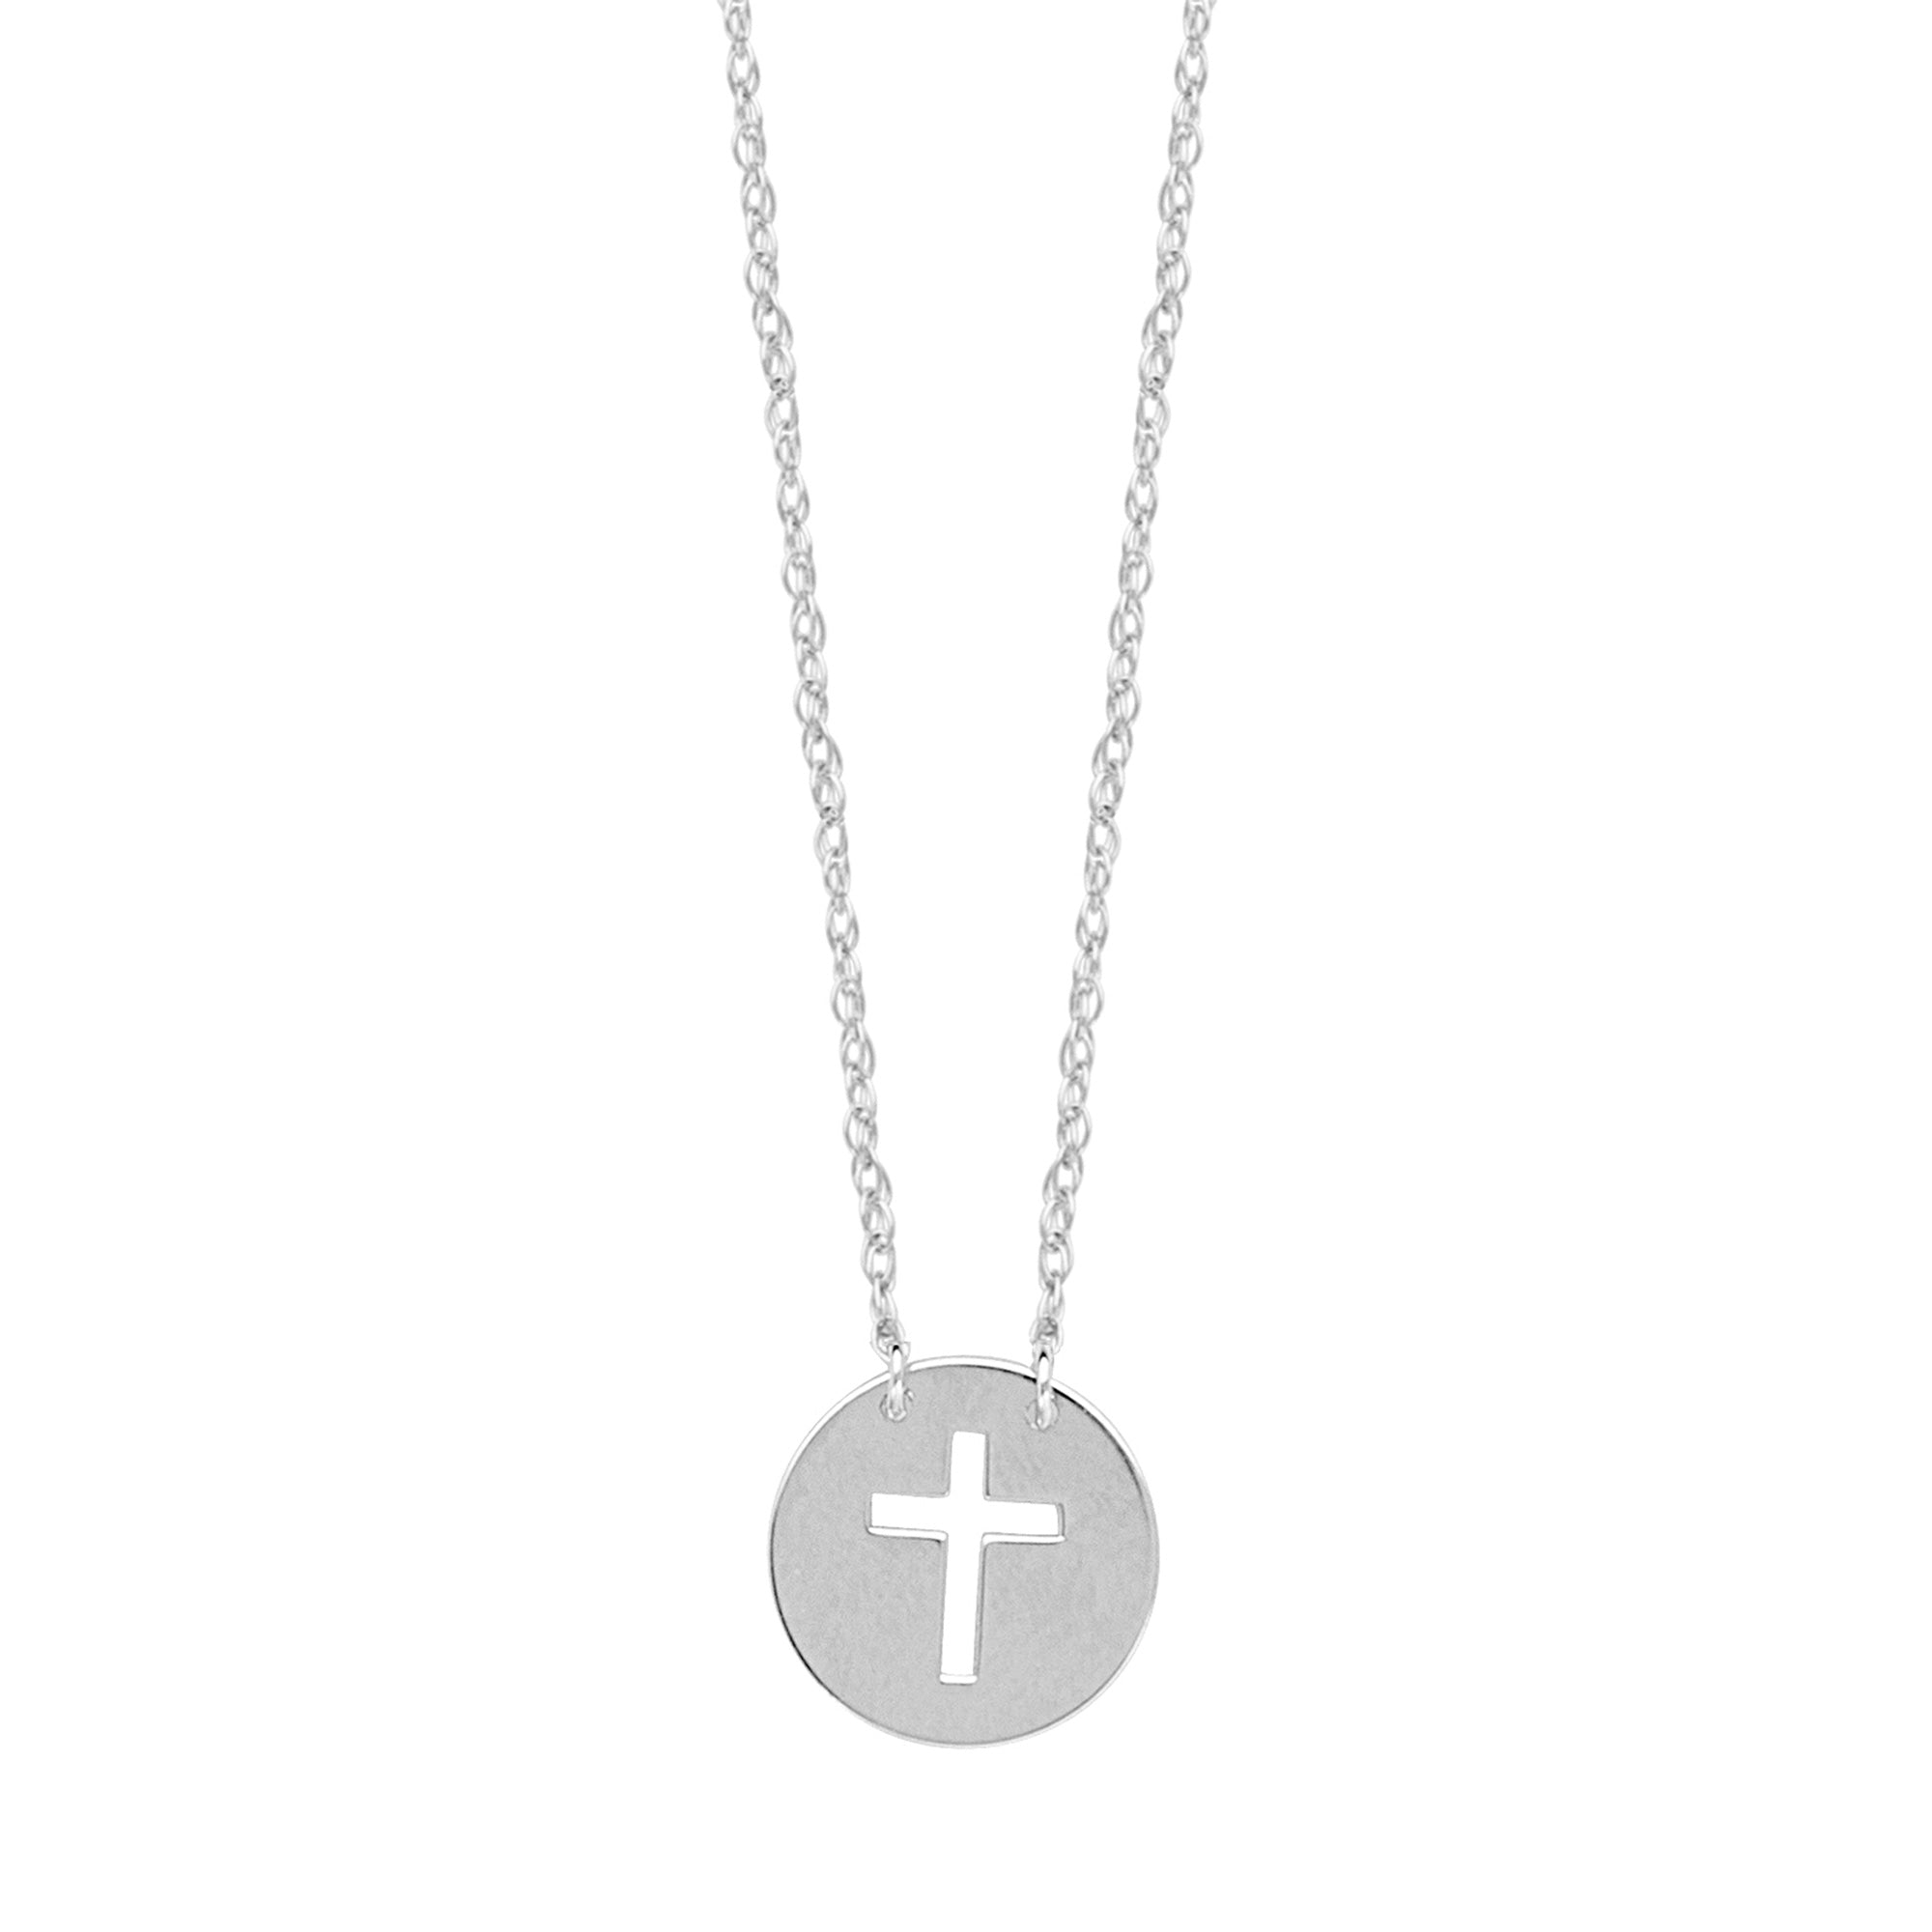 14K White Gold Mini Cross Pendant Necklace, 16" To 18" Adjustable fine designer jewelry for men and women